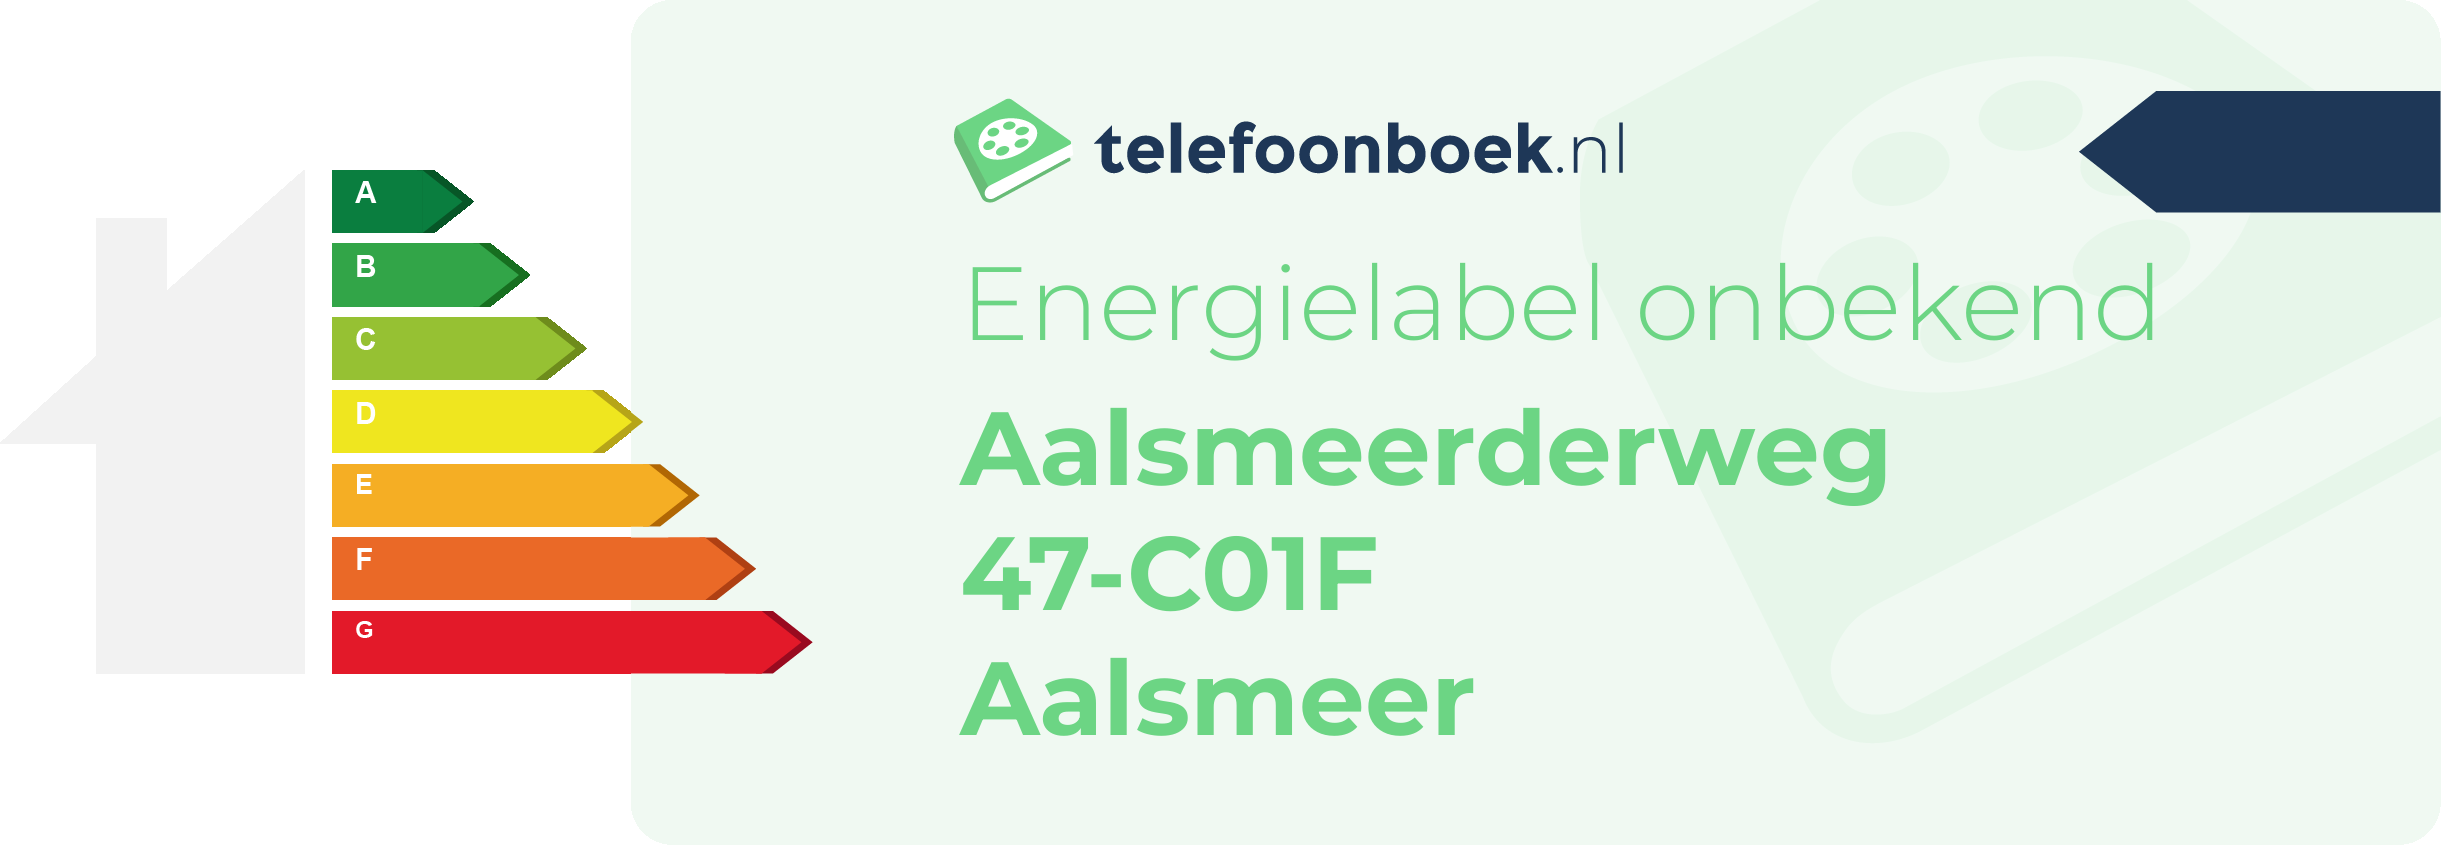 Energielabel Aalsmeerderweg 47-C01F Aalsmeer